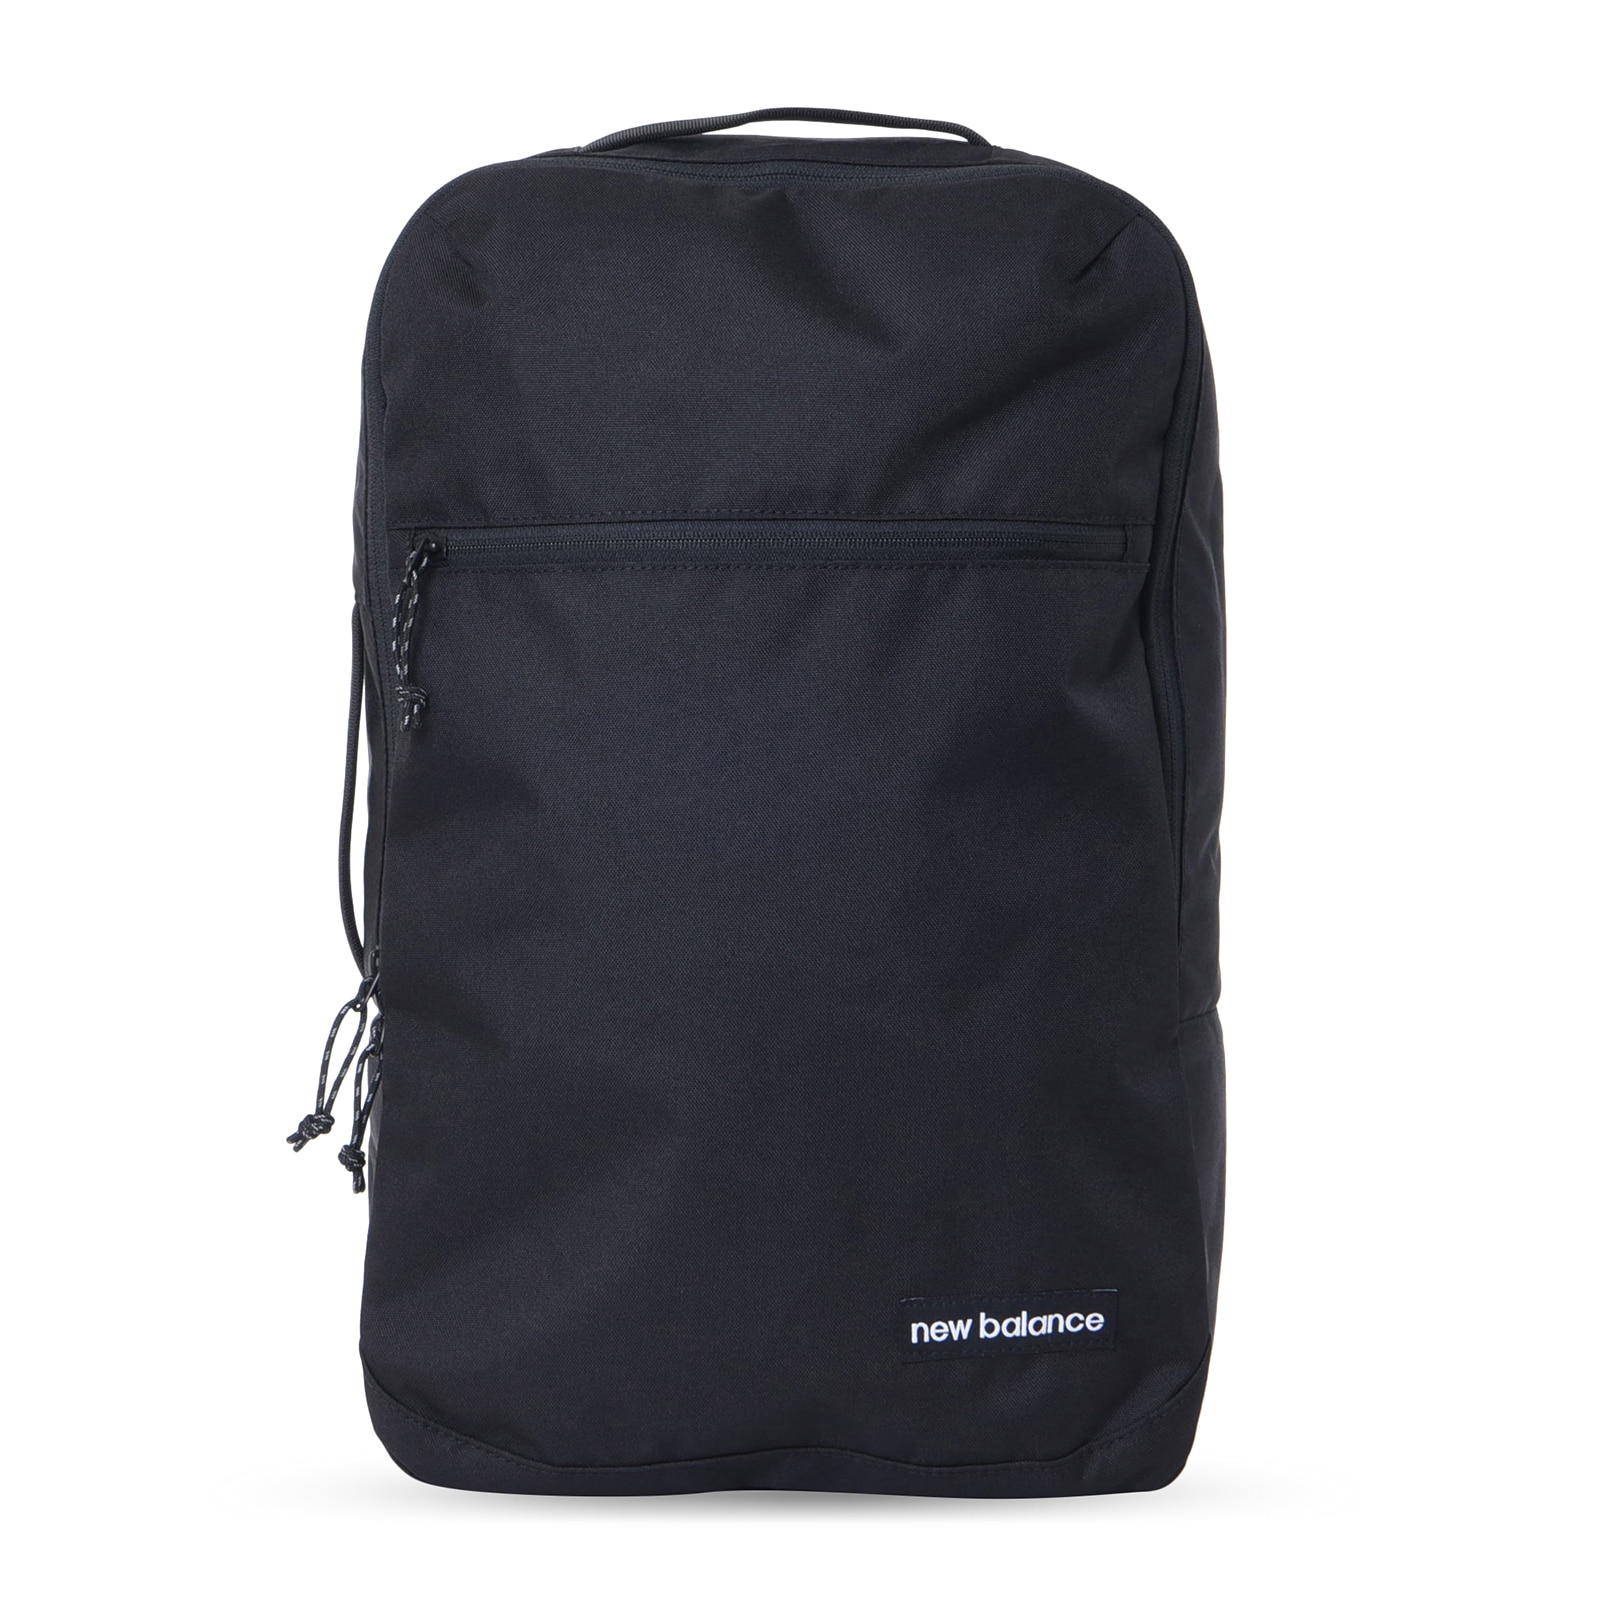 Commutation Backpack